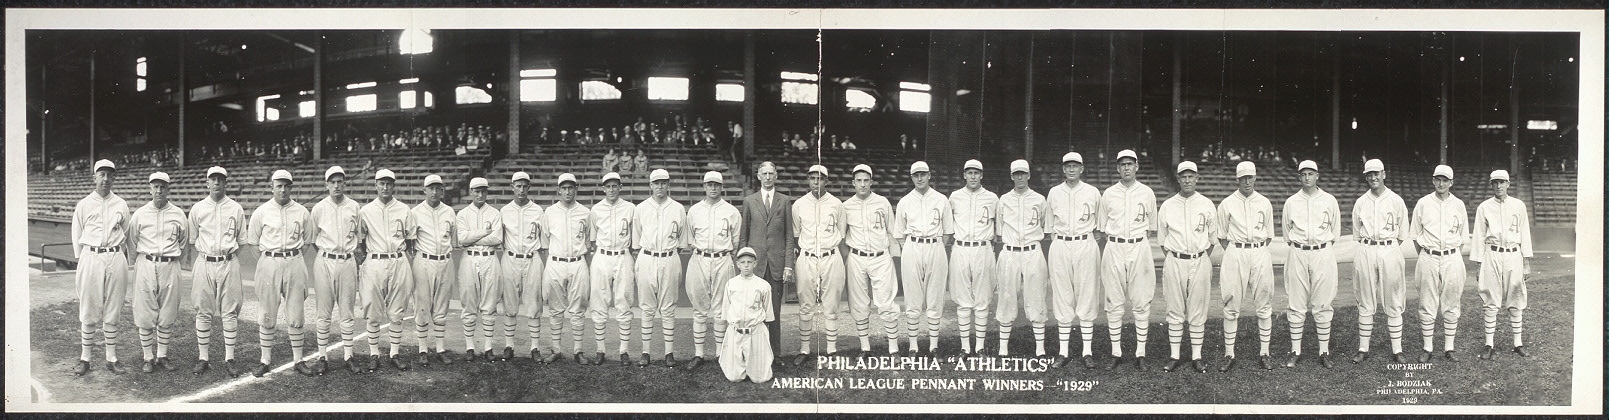 Philadelphia "Athletics", American League pennant...